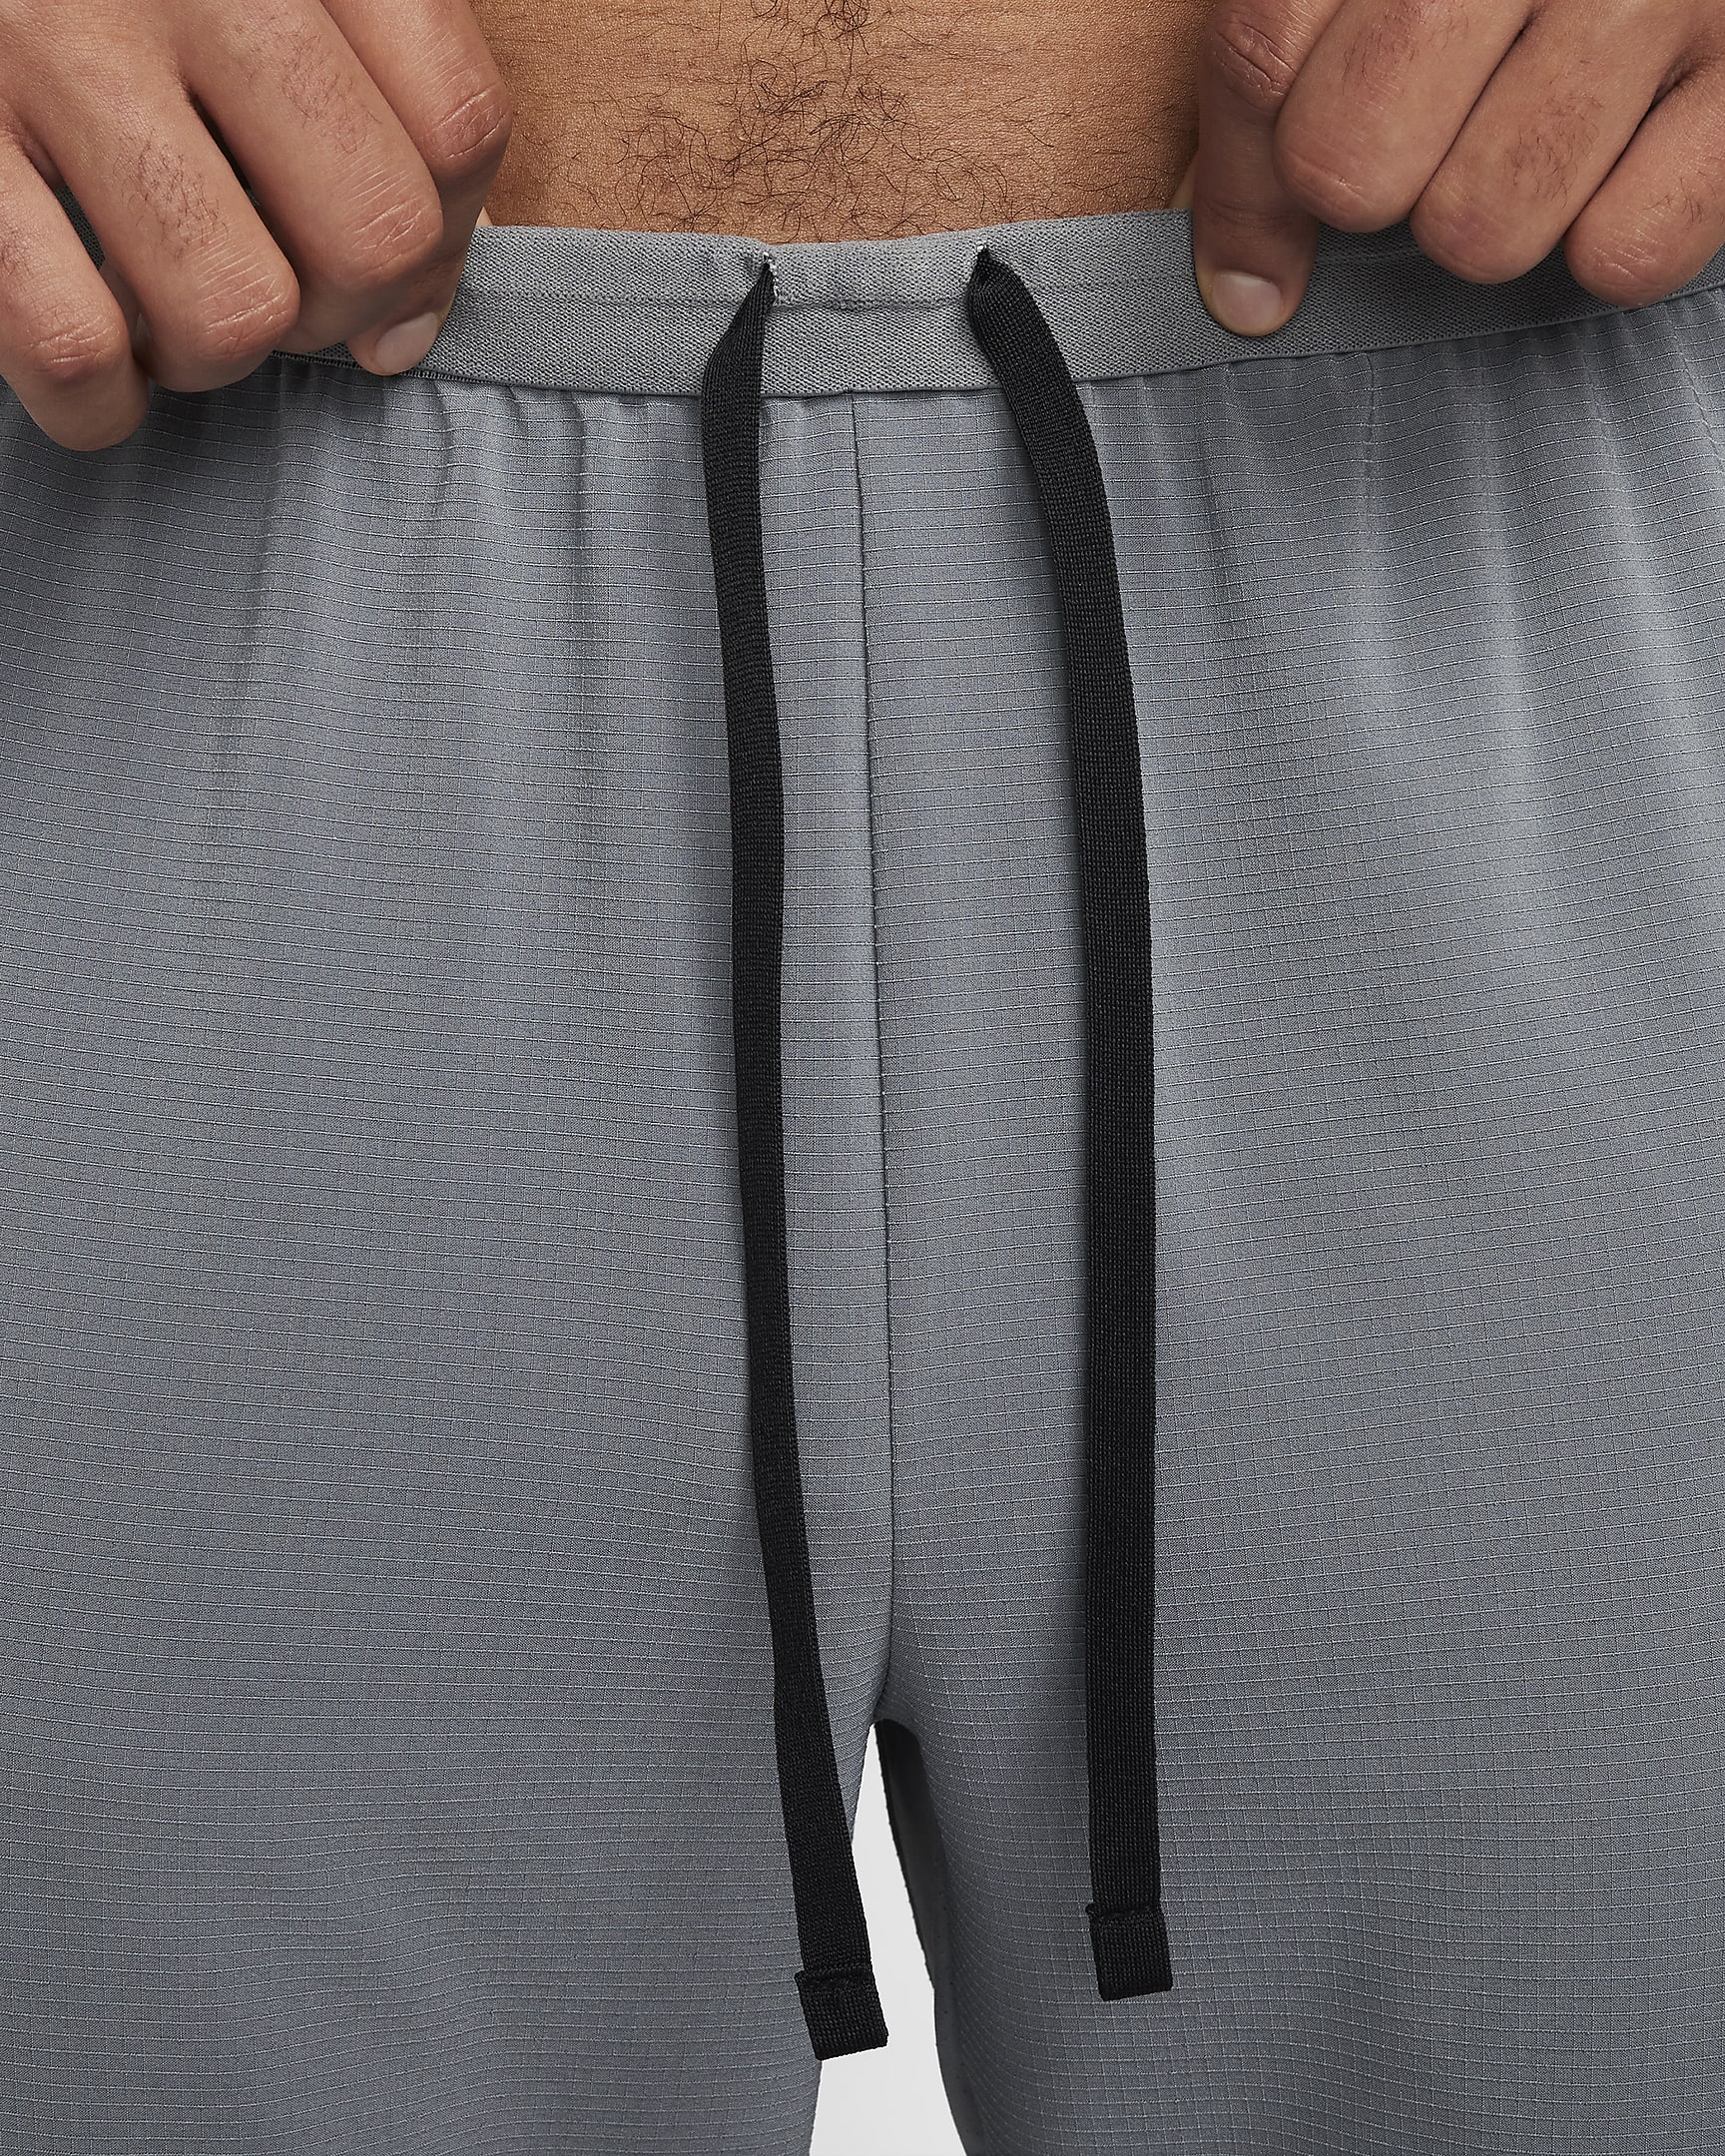 Nike Flex Rep Men's Dri-FIT Fitness Trousers. Nike AT